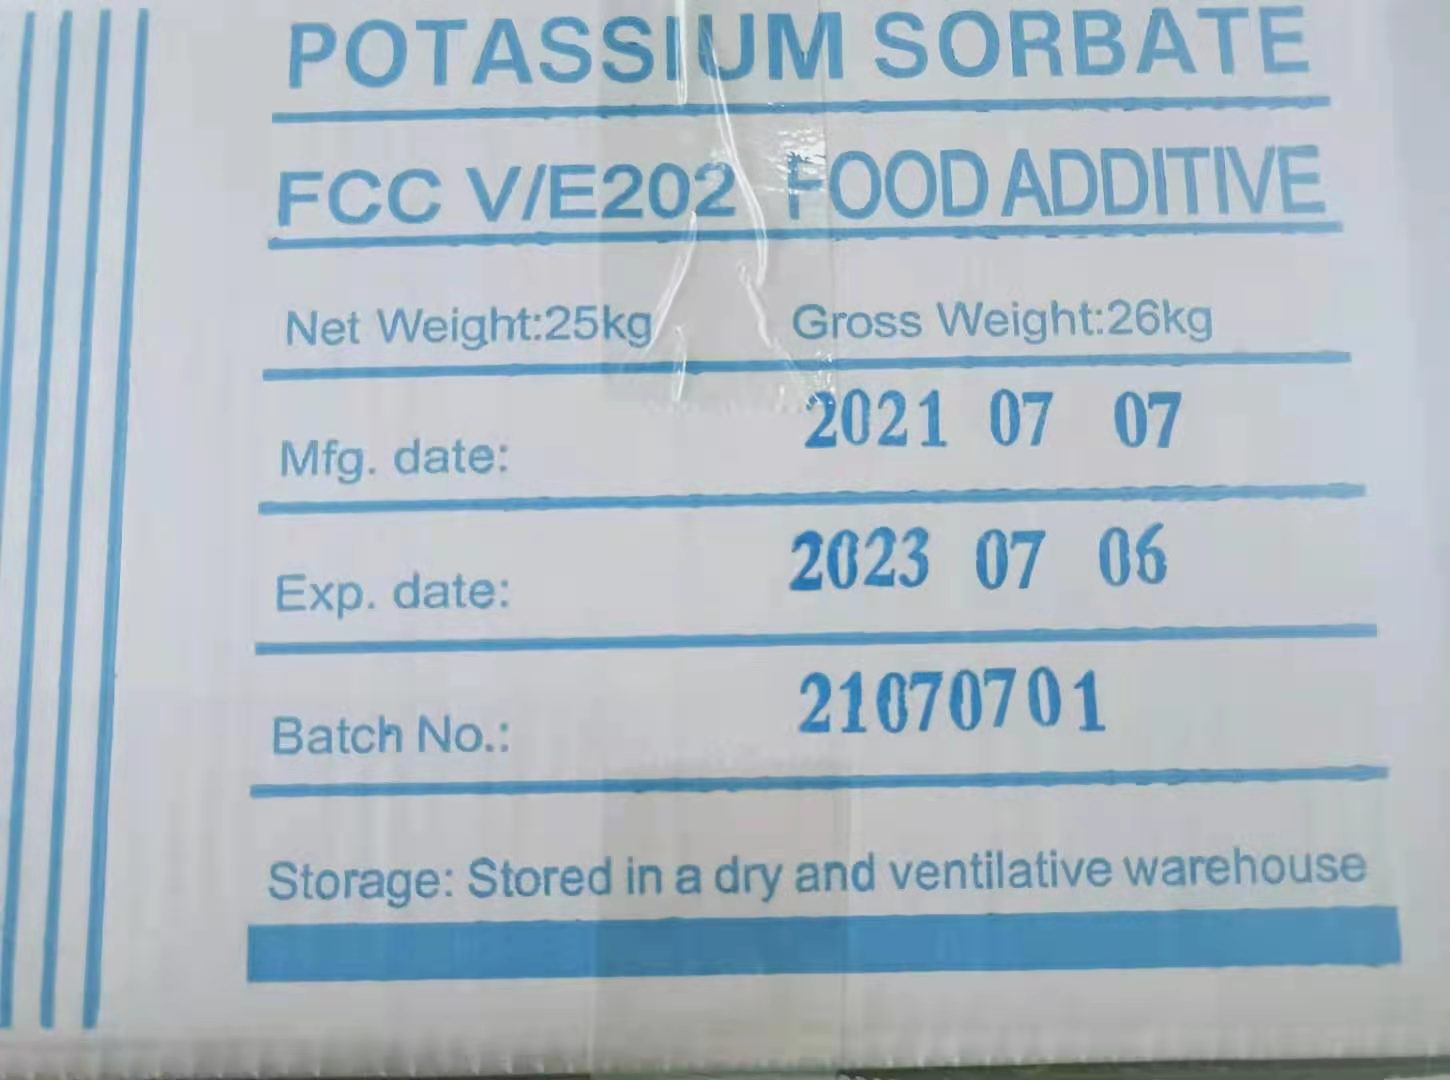 Potassium Sorbate carton